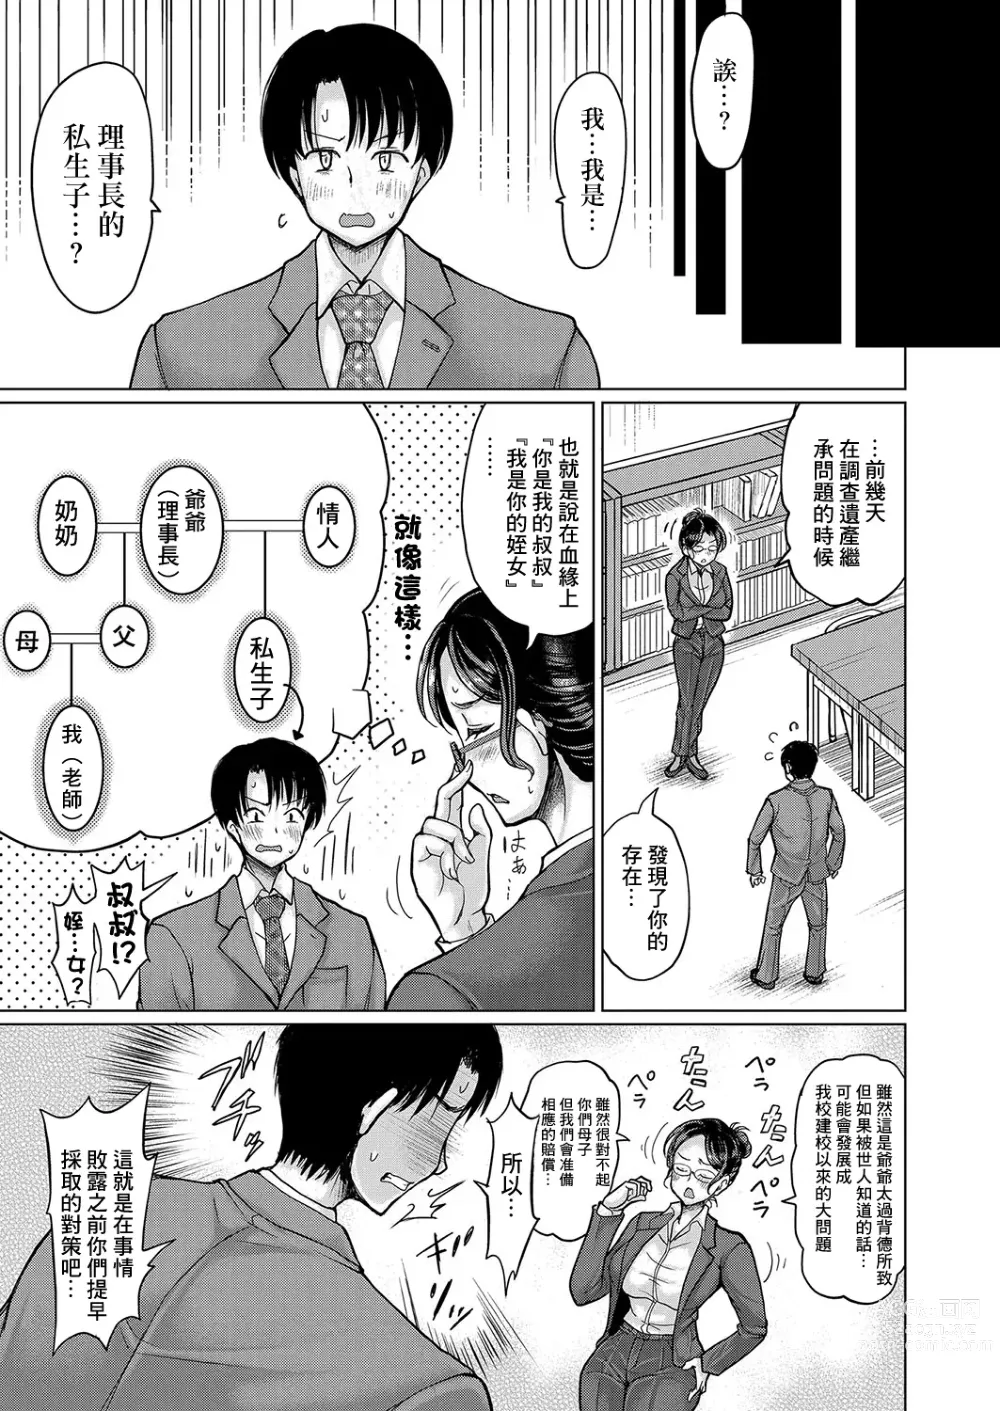 Page 5 of manga Meimon Mei Jyokyoushi